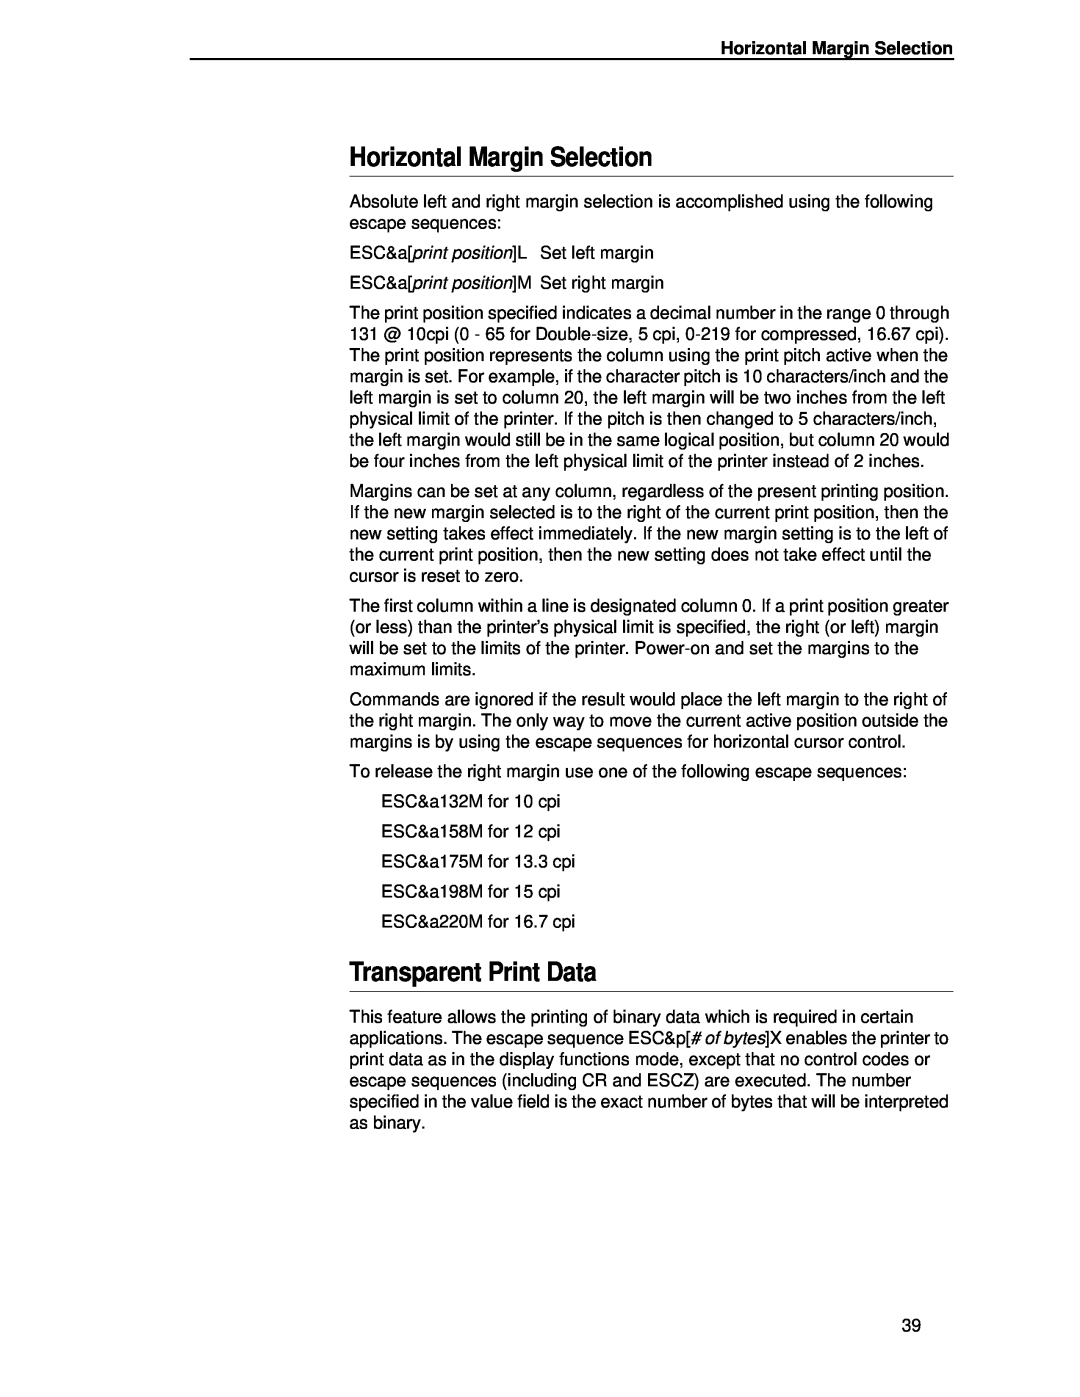 Compaq 5525B/31/32 manual Horizontal Margin Selection, Transparent Print Data 